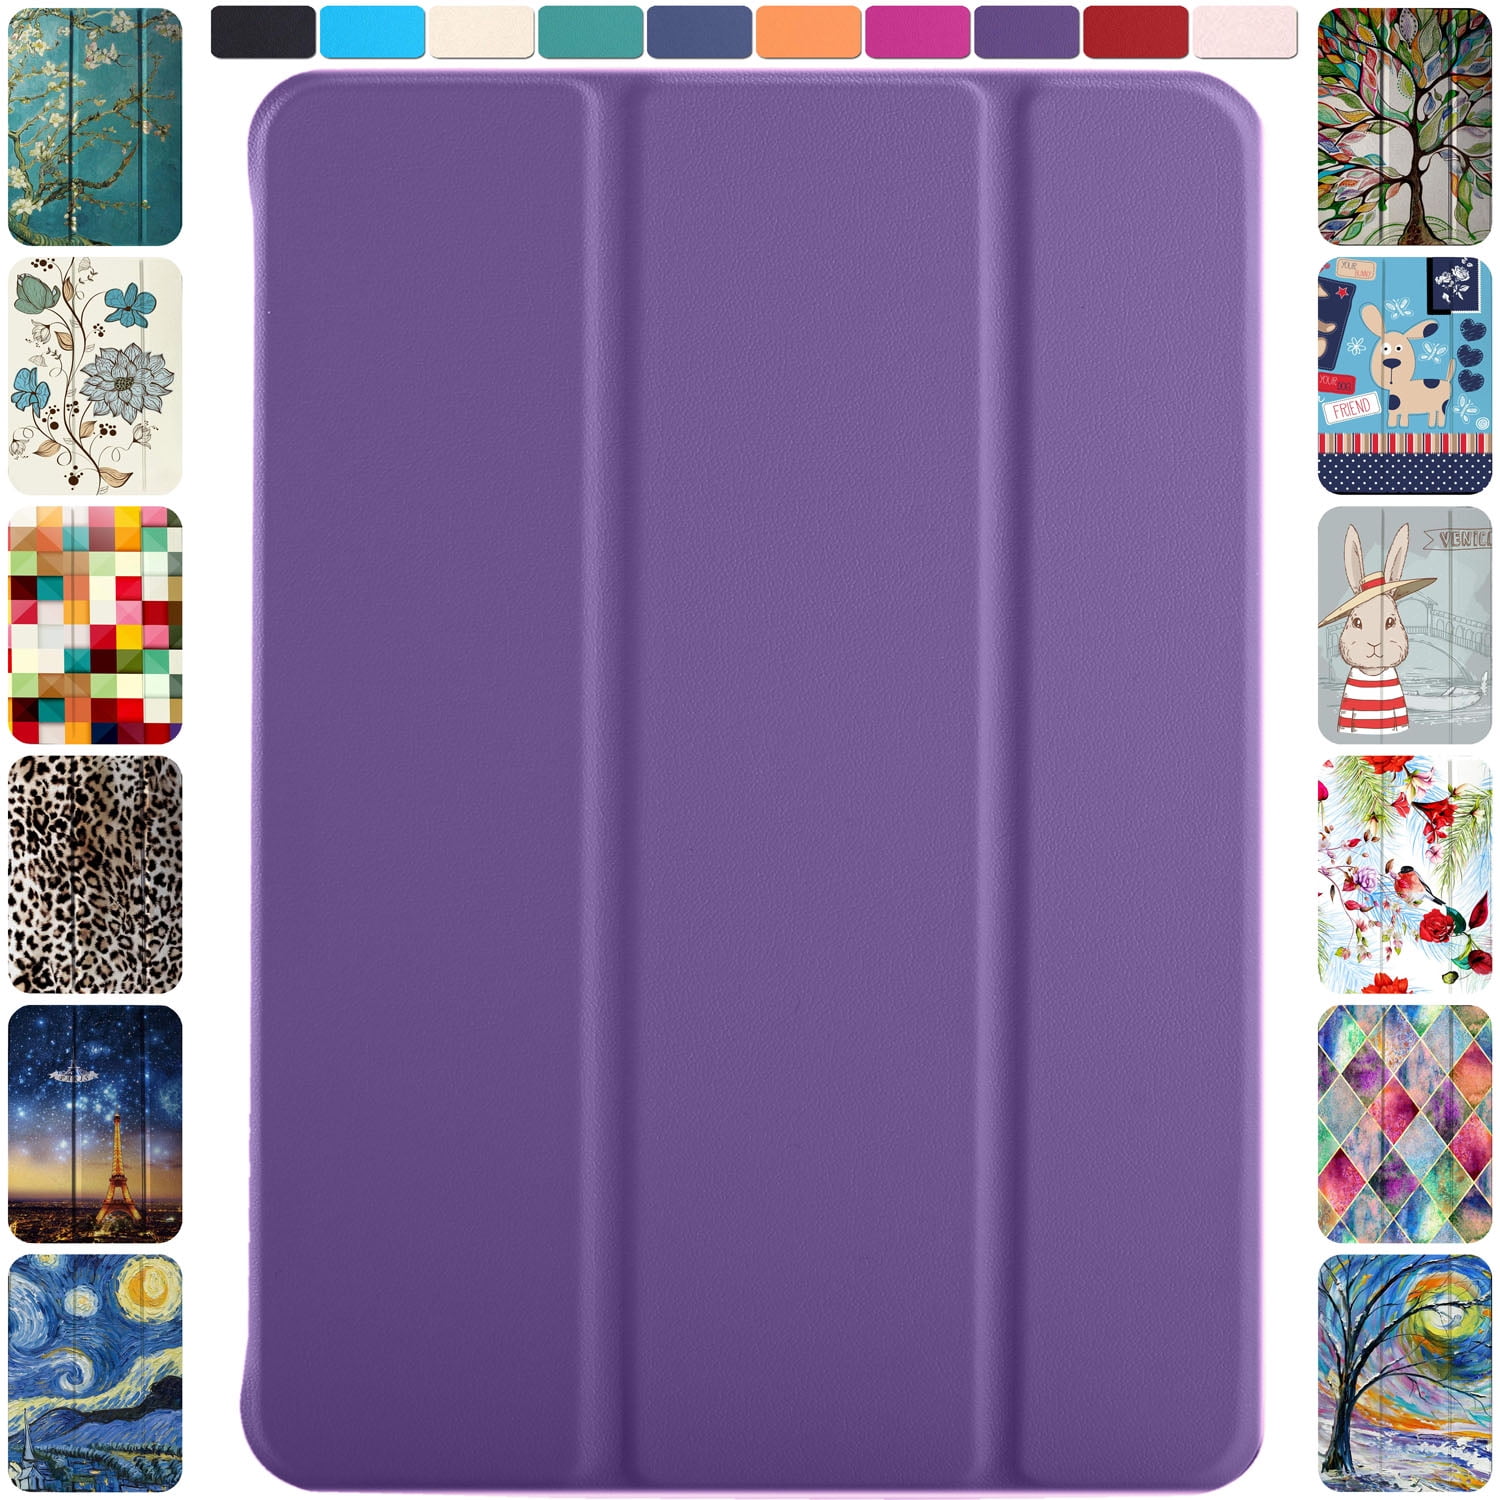 Ektor Ltd 7.9 Design iPad Mini/iPad Mini 2 Part 1 of 3 iPad Mini 3 Sleeve Soft Case Bag Pouch Skin Different Patterns Available!